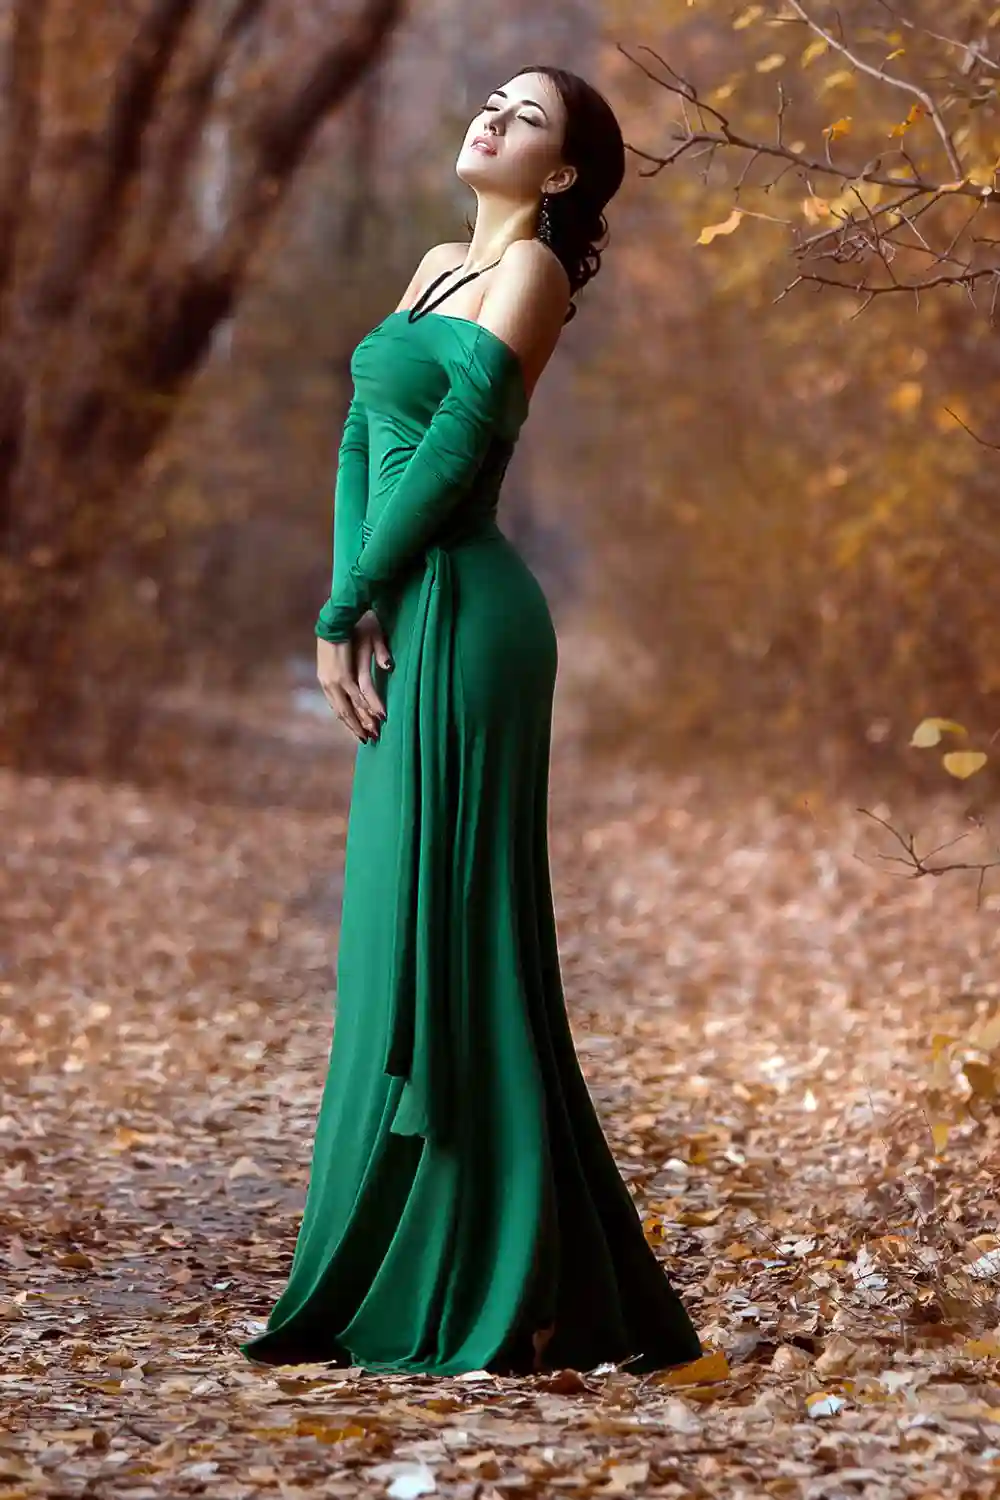 Lady in a luxury lush emerald green dress